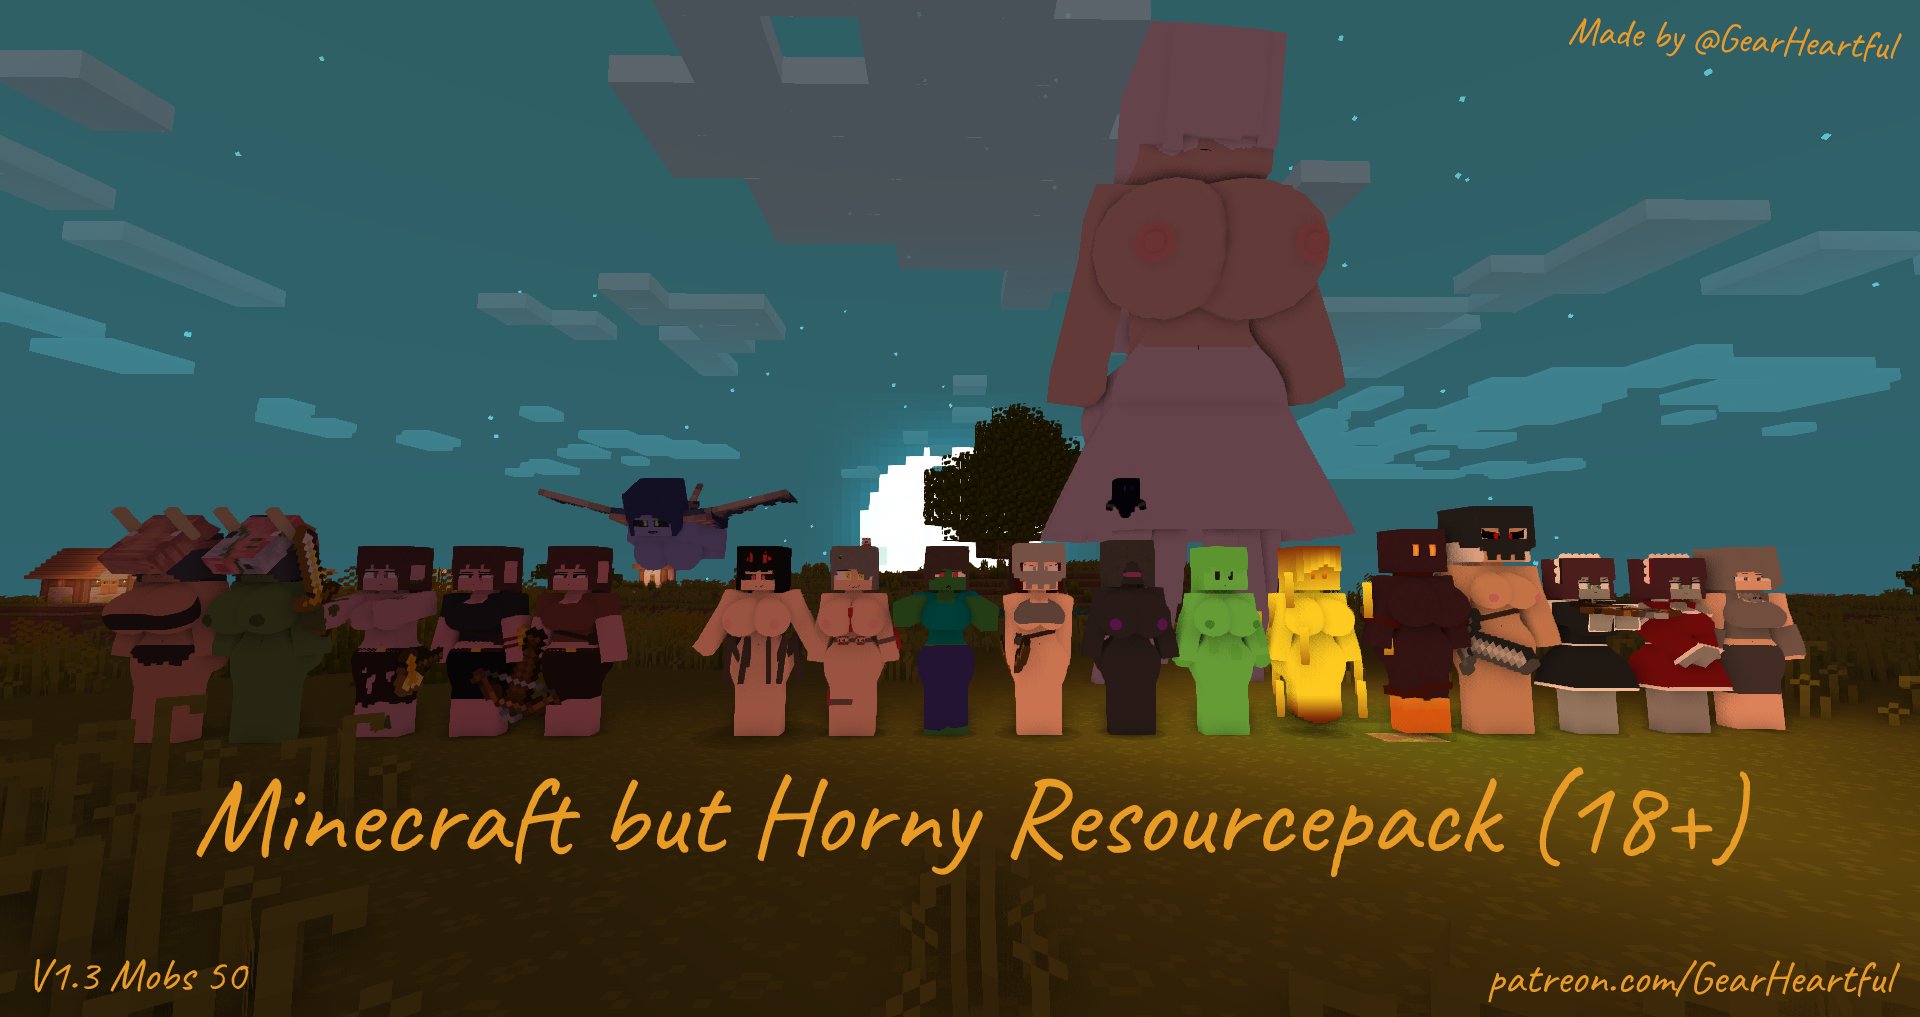 Minecraft but Horny Resourcepack (18+ Pack)  mobs 50 - Adult Gaming -  LoversLab